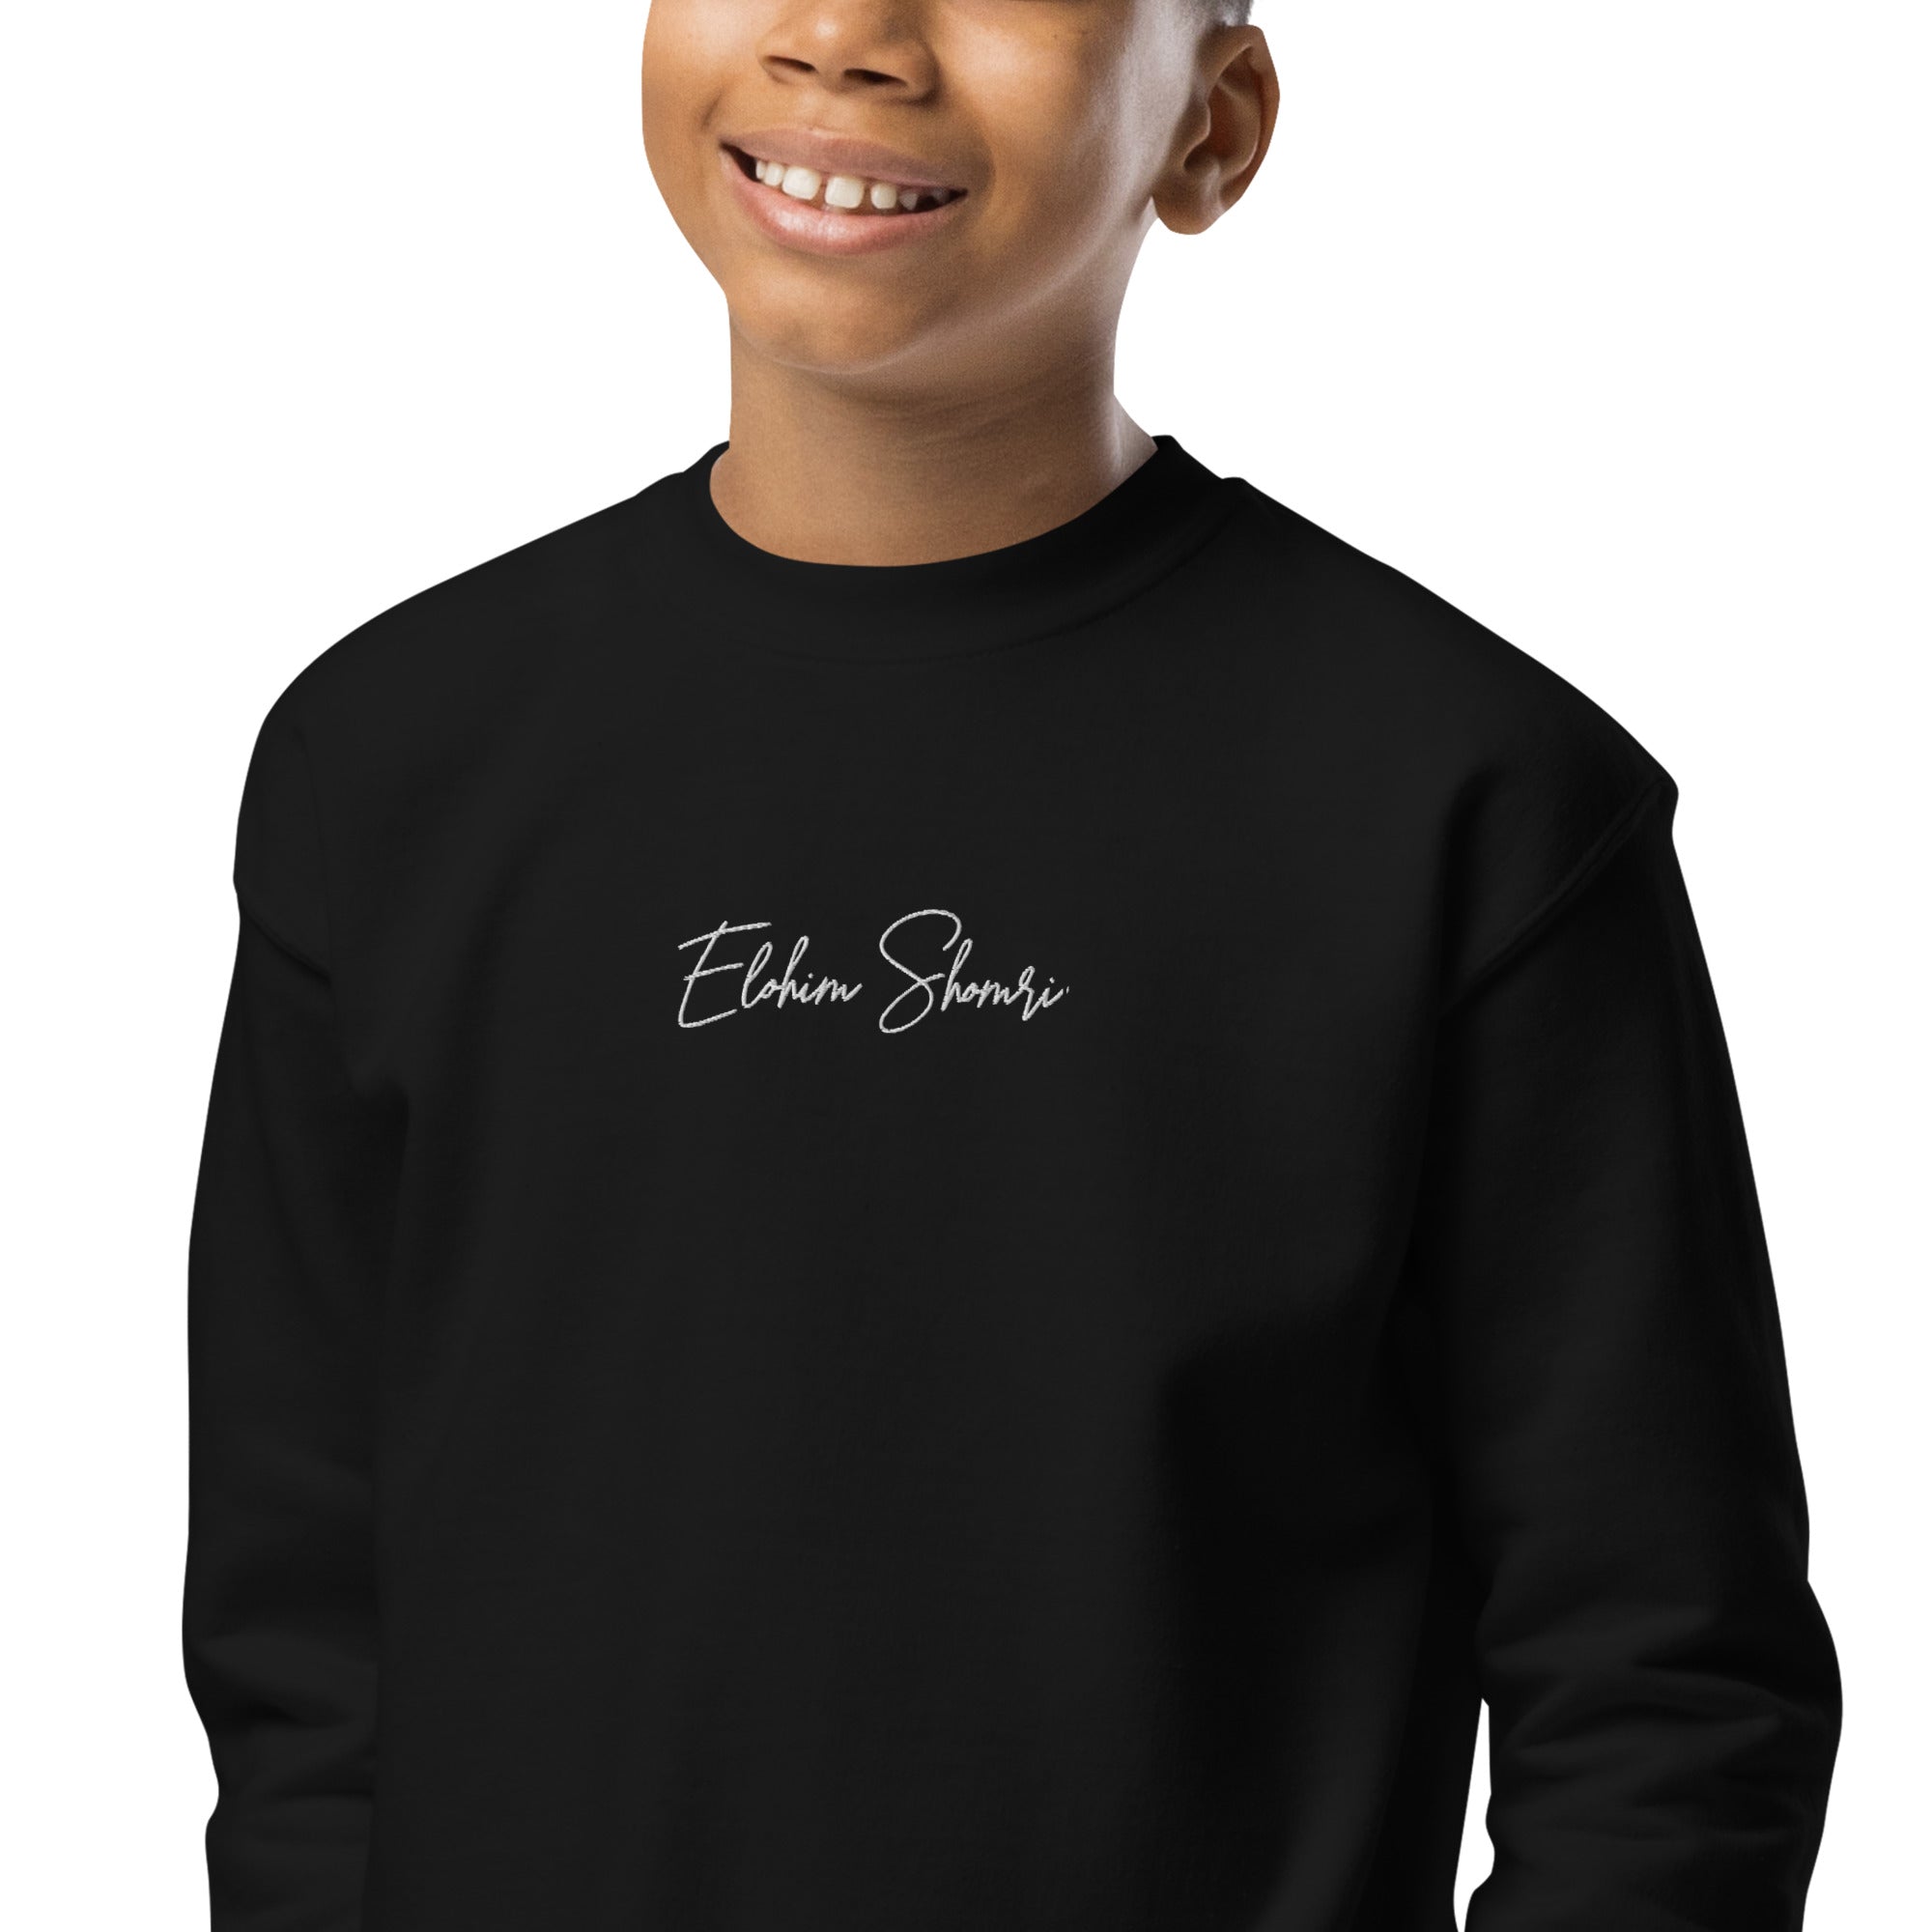 Elohim Shomri Embroidered Youth Crew Neck Sweatshirt